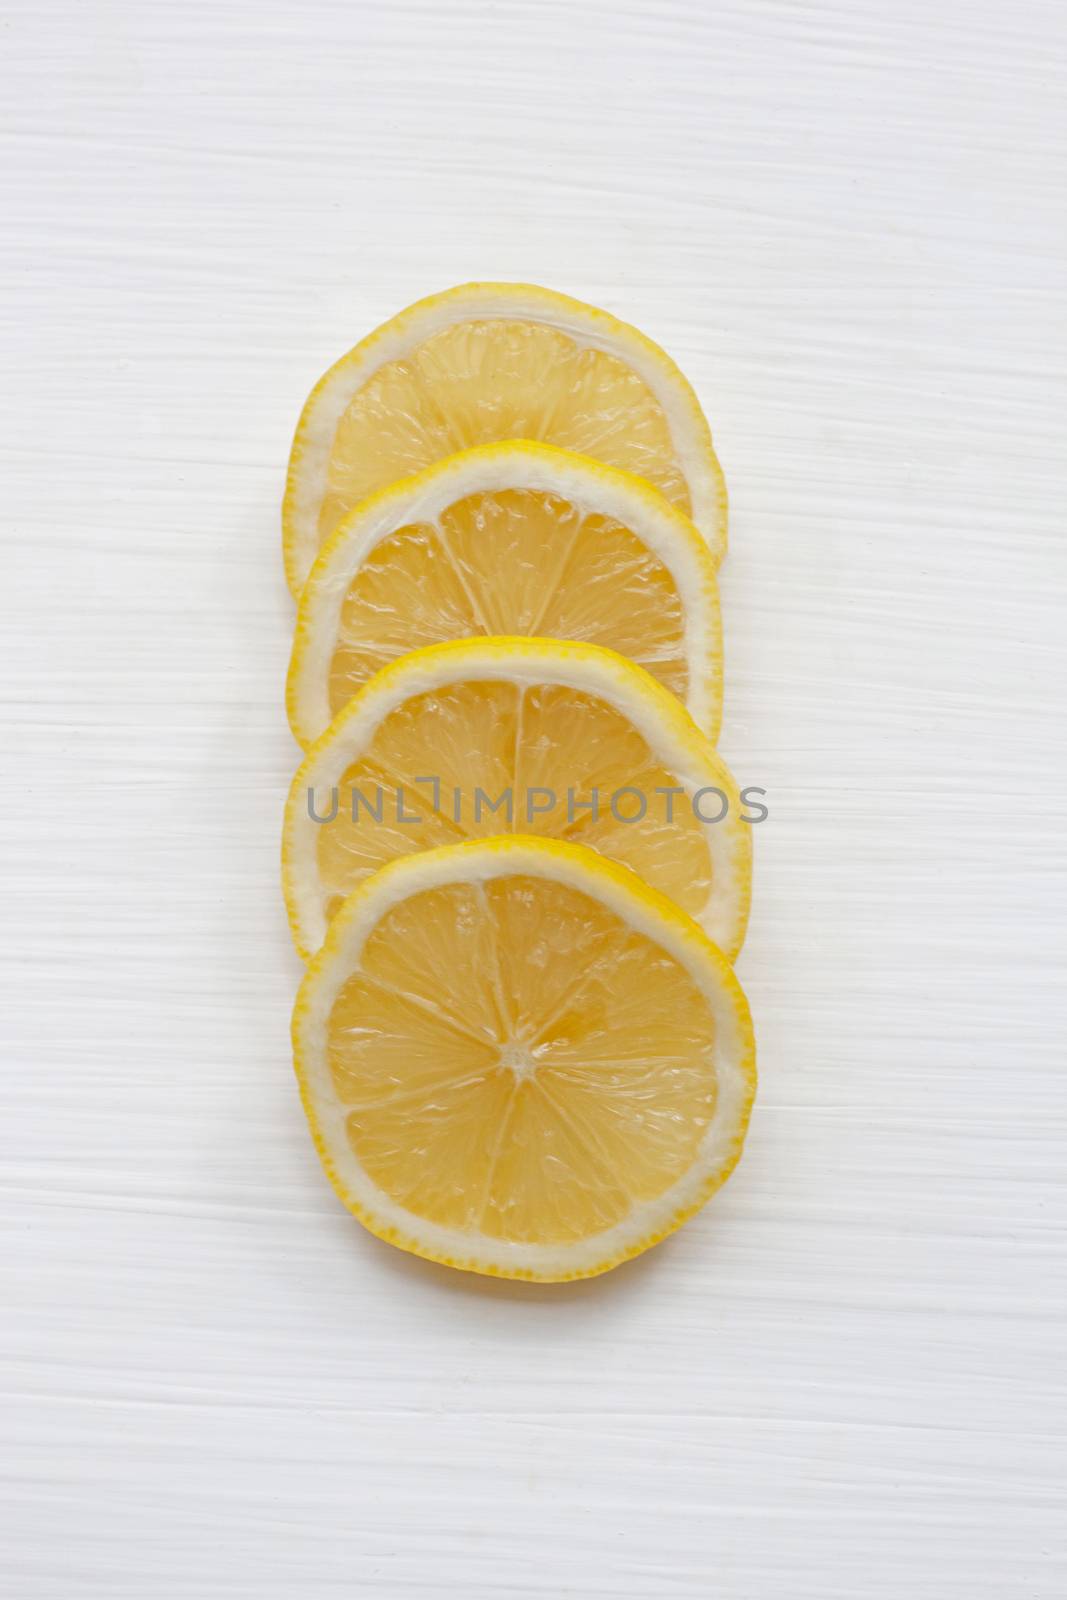 Fresh lemon slices  on a white background.